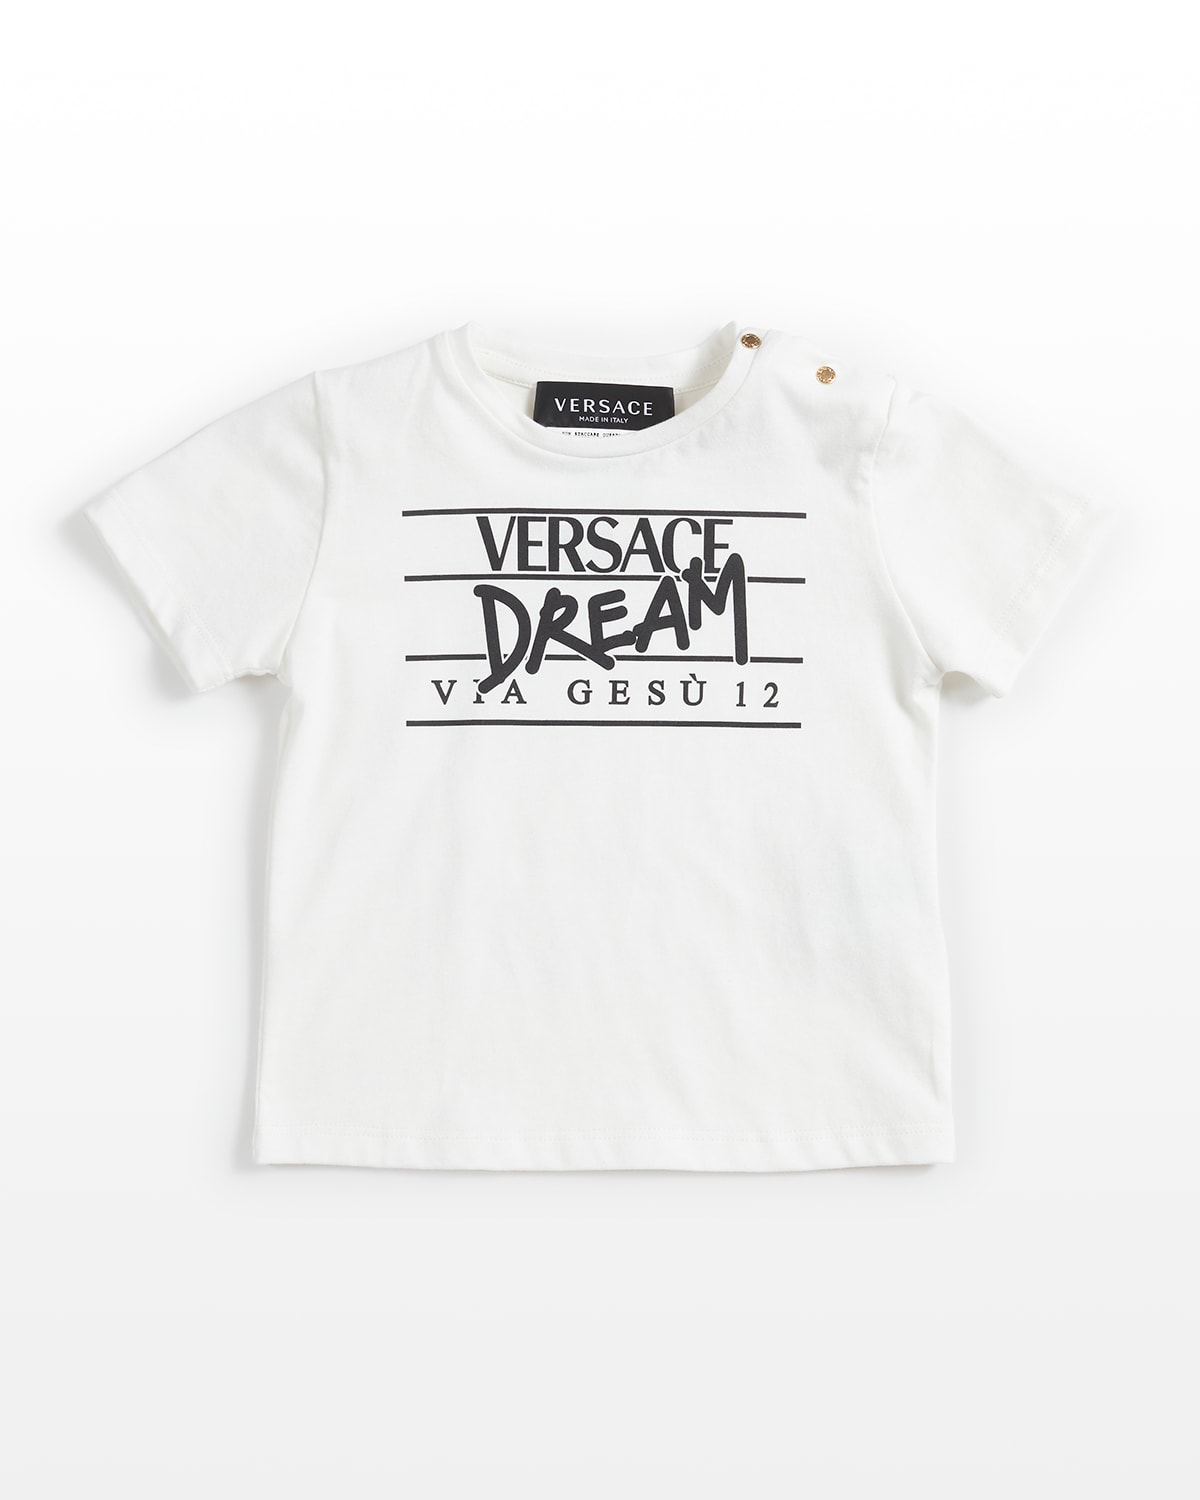 Girl's Dream Logo Graphic T-Shirt, Size 12-36M